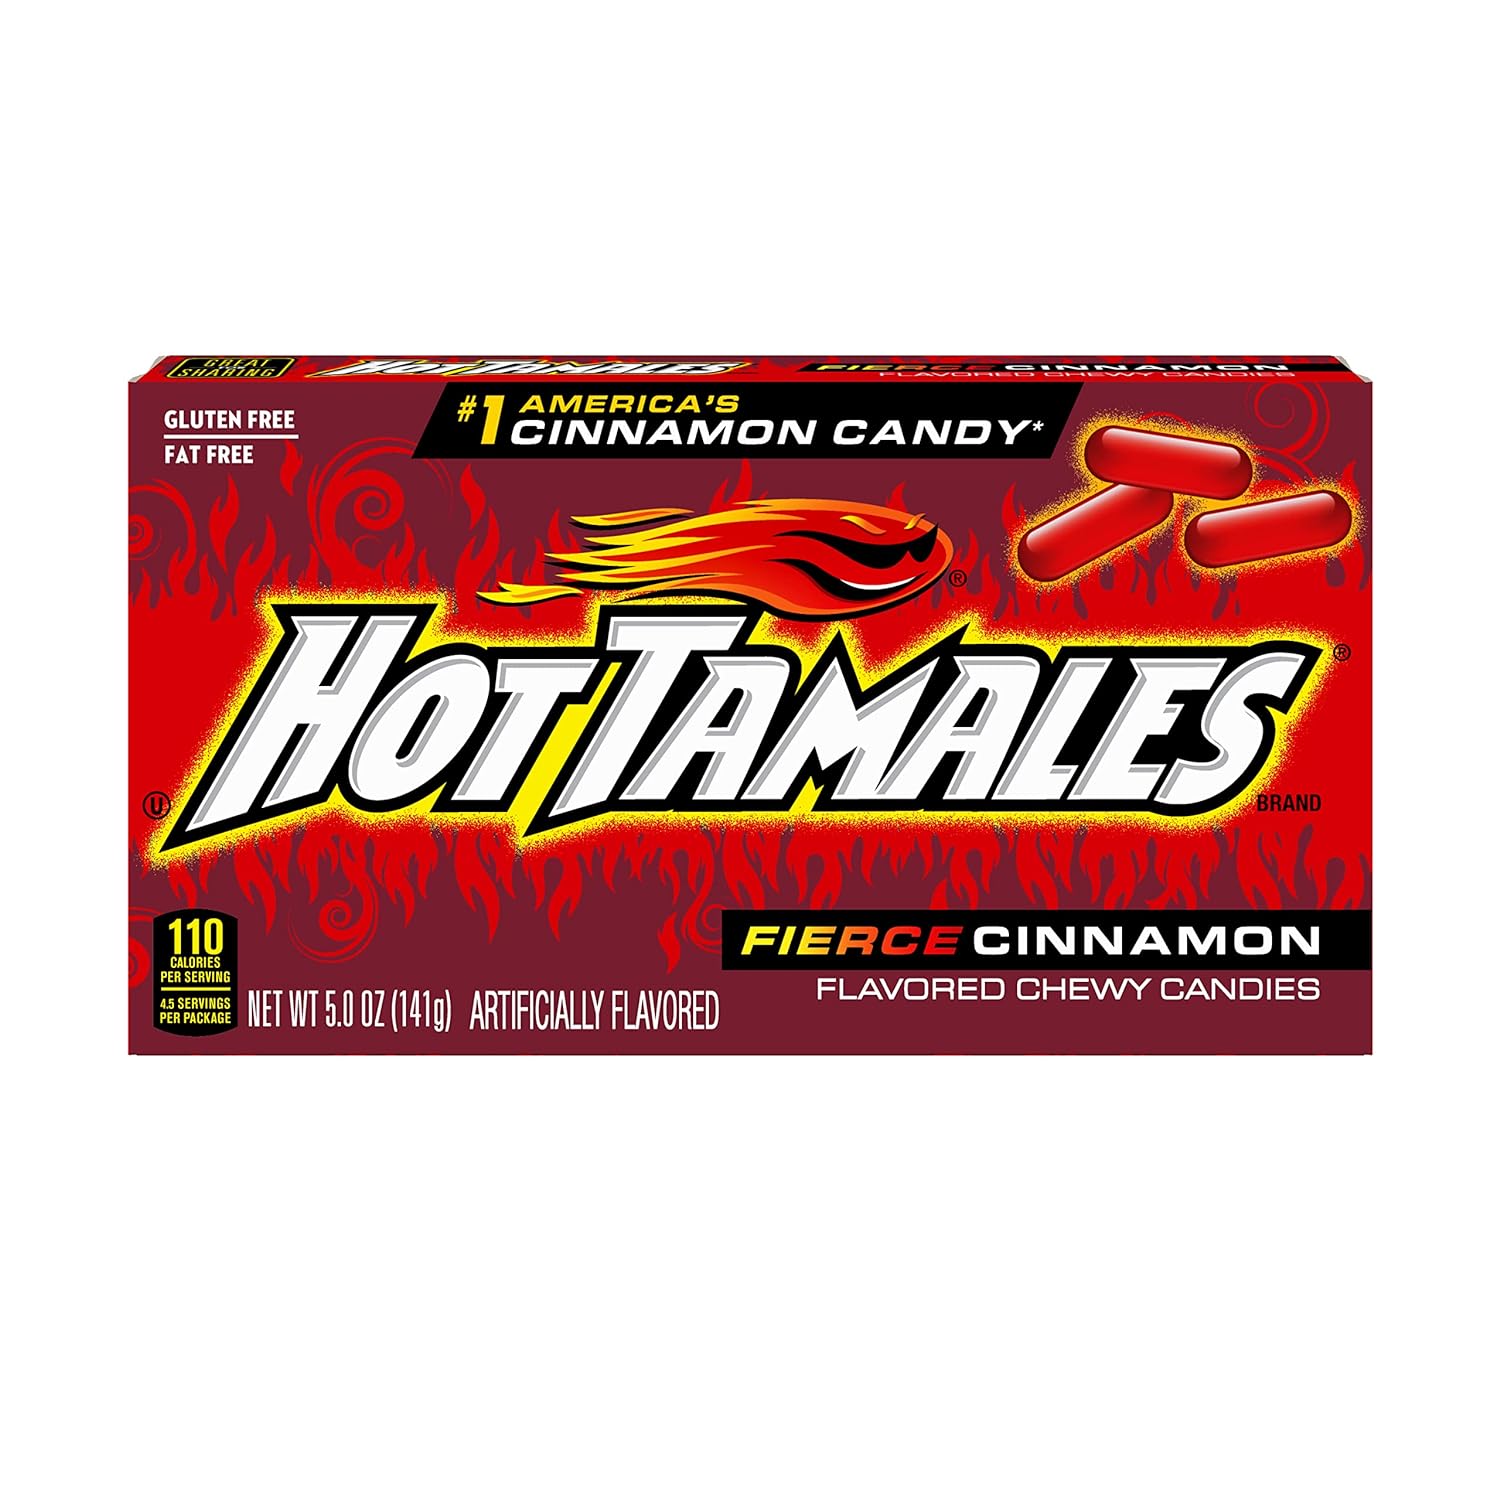 Hot Tamales Fierce Cinnamon Flavored Chewy Candies 5 Oz Pack